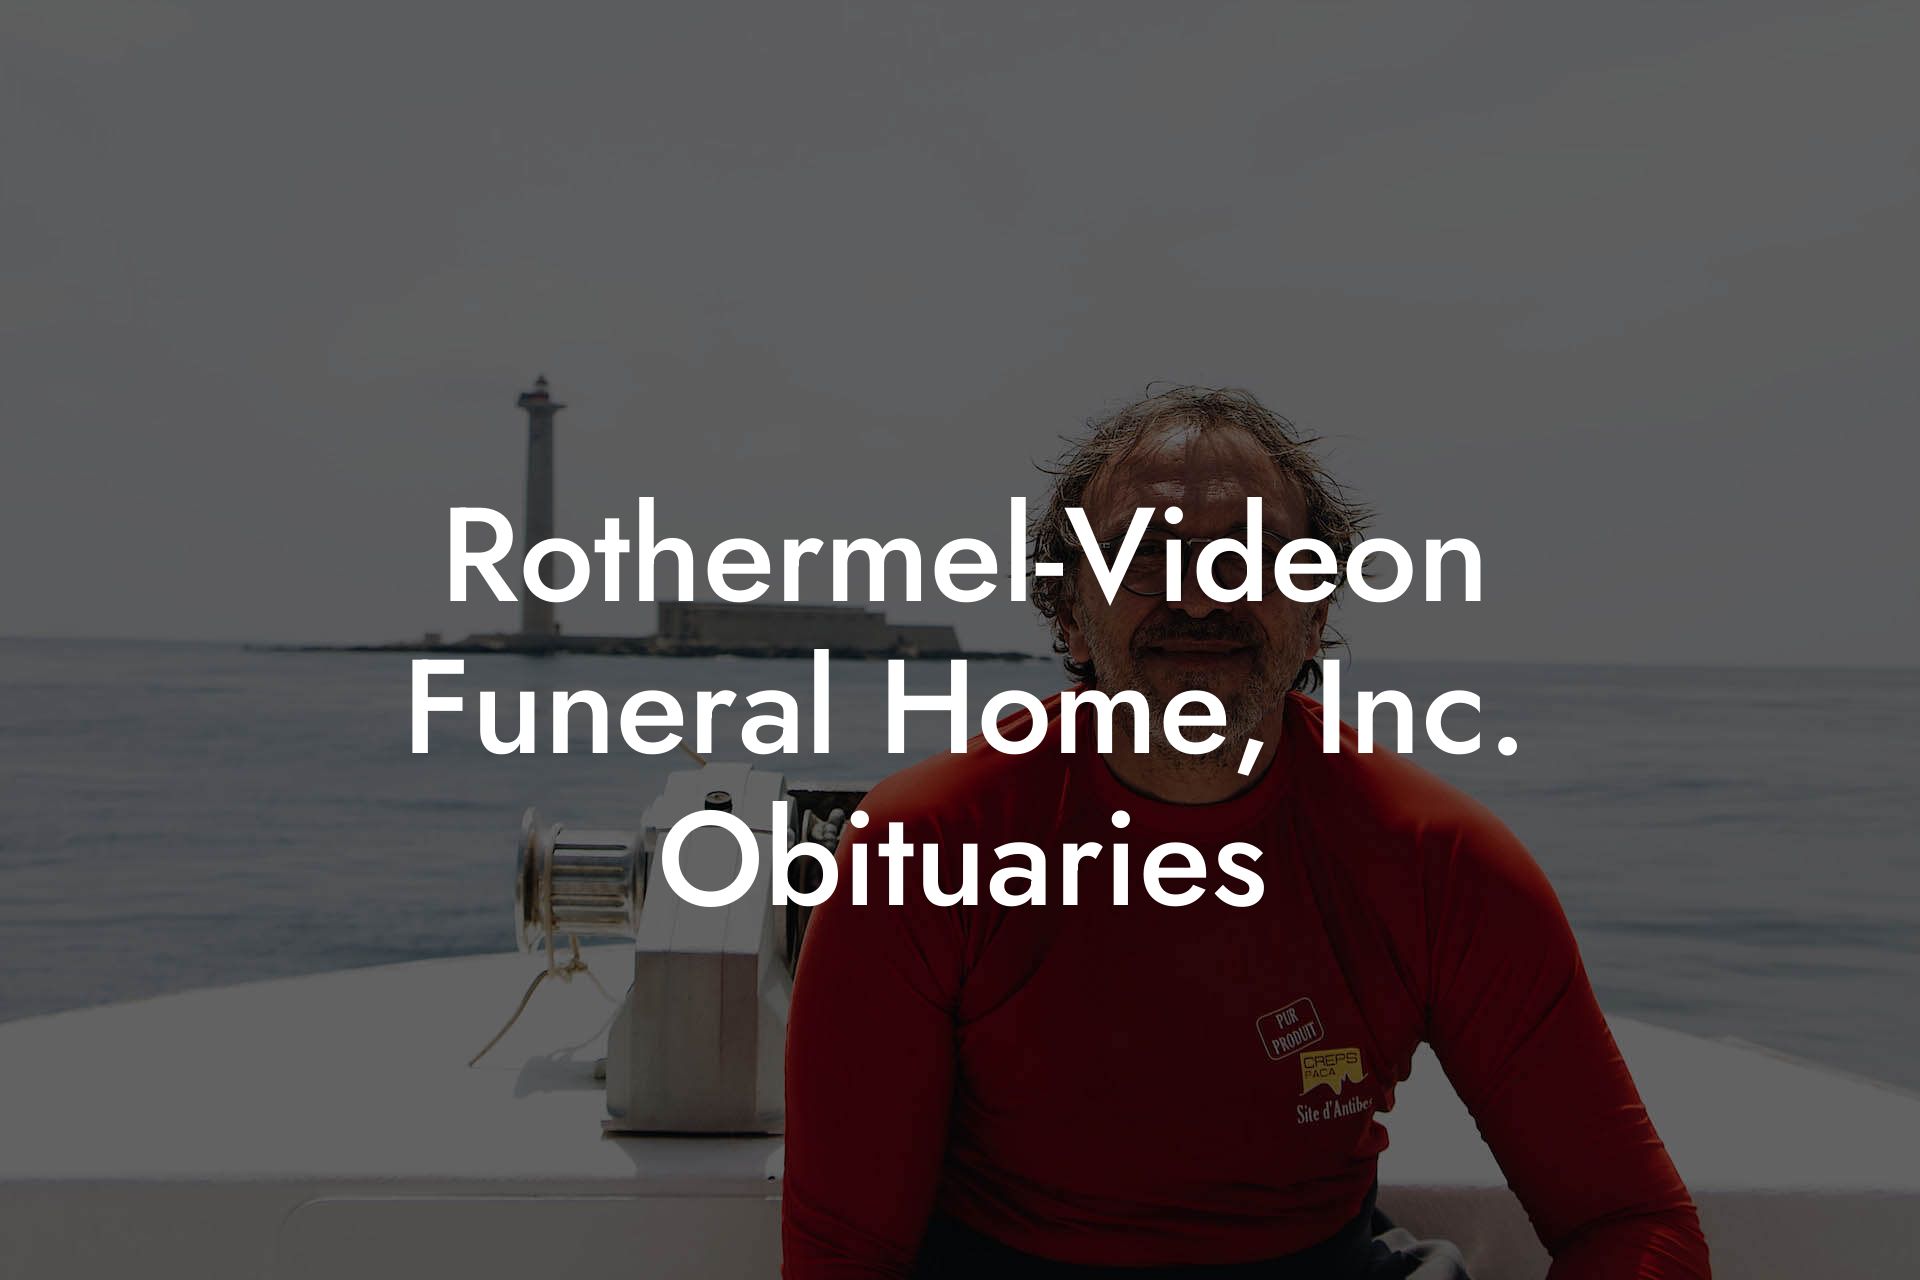 Rothermel-Videon Funeral Home, Inc. Obituaries